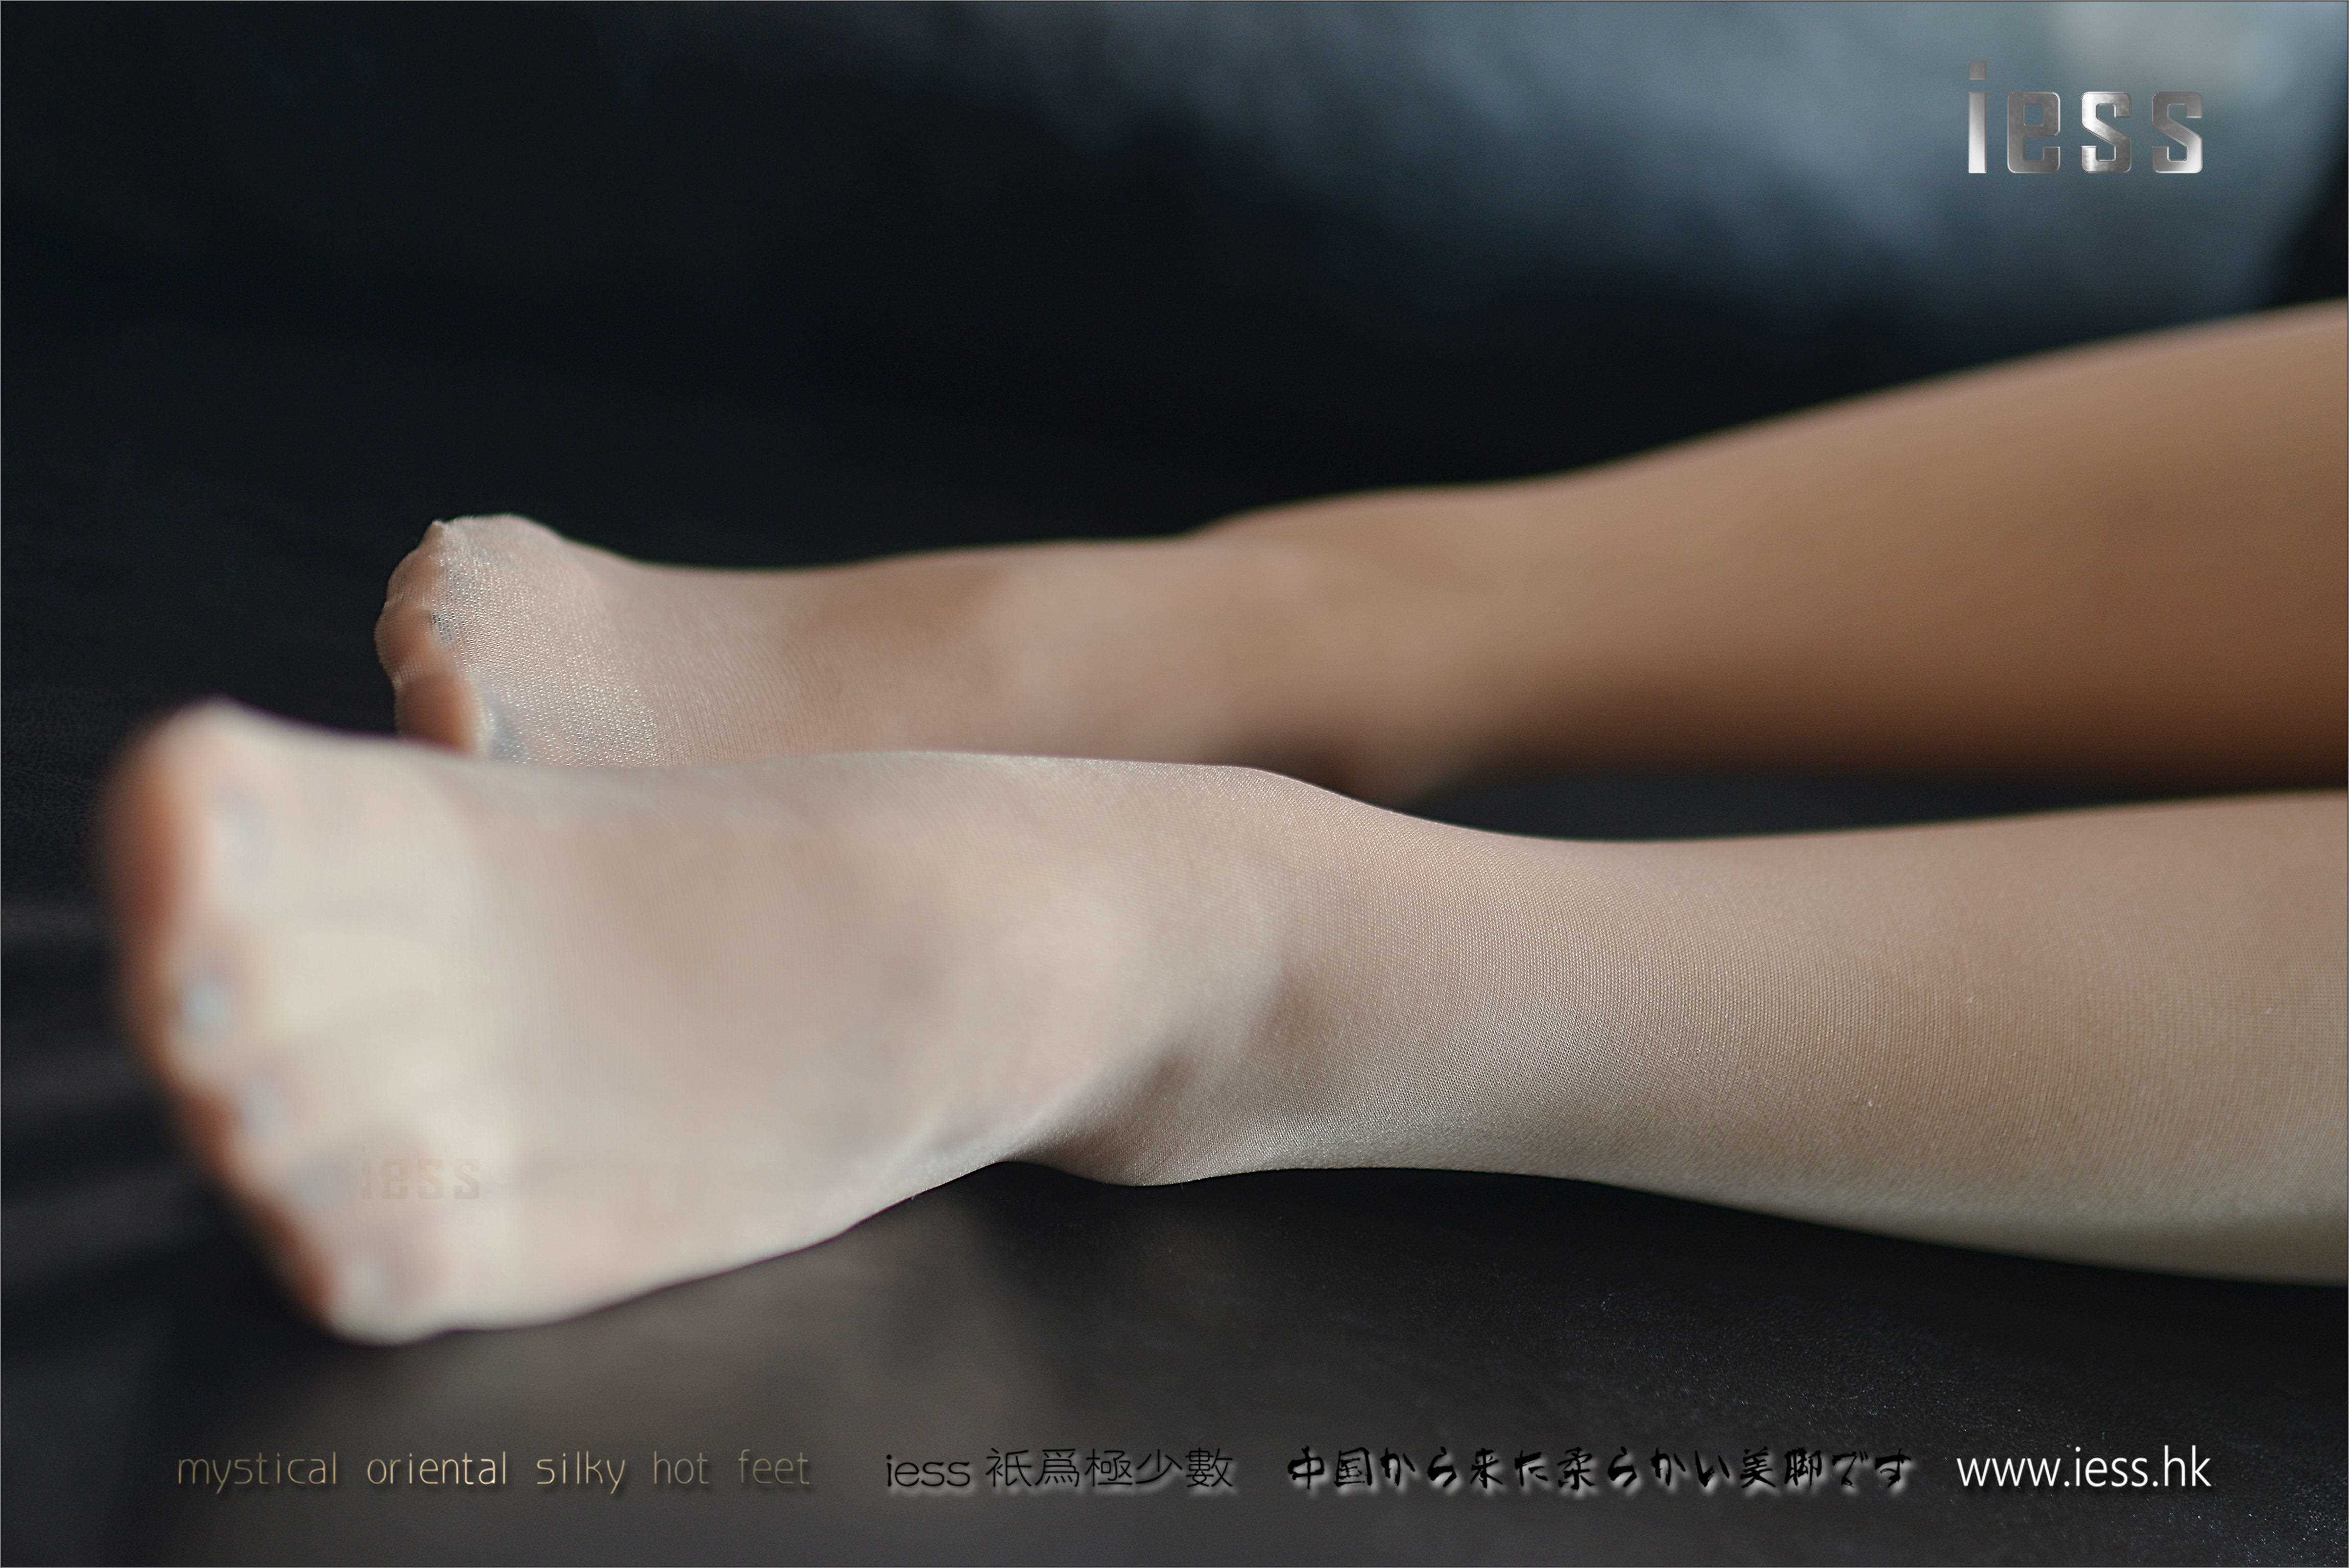 China Beauty Legs and feet 198